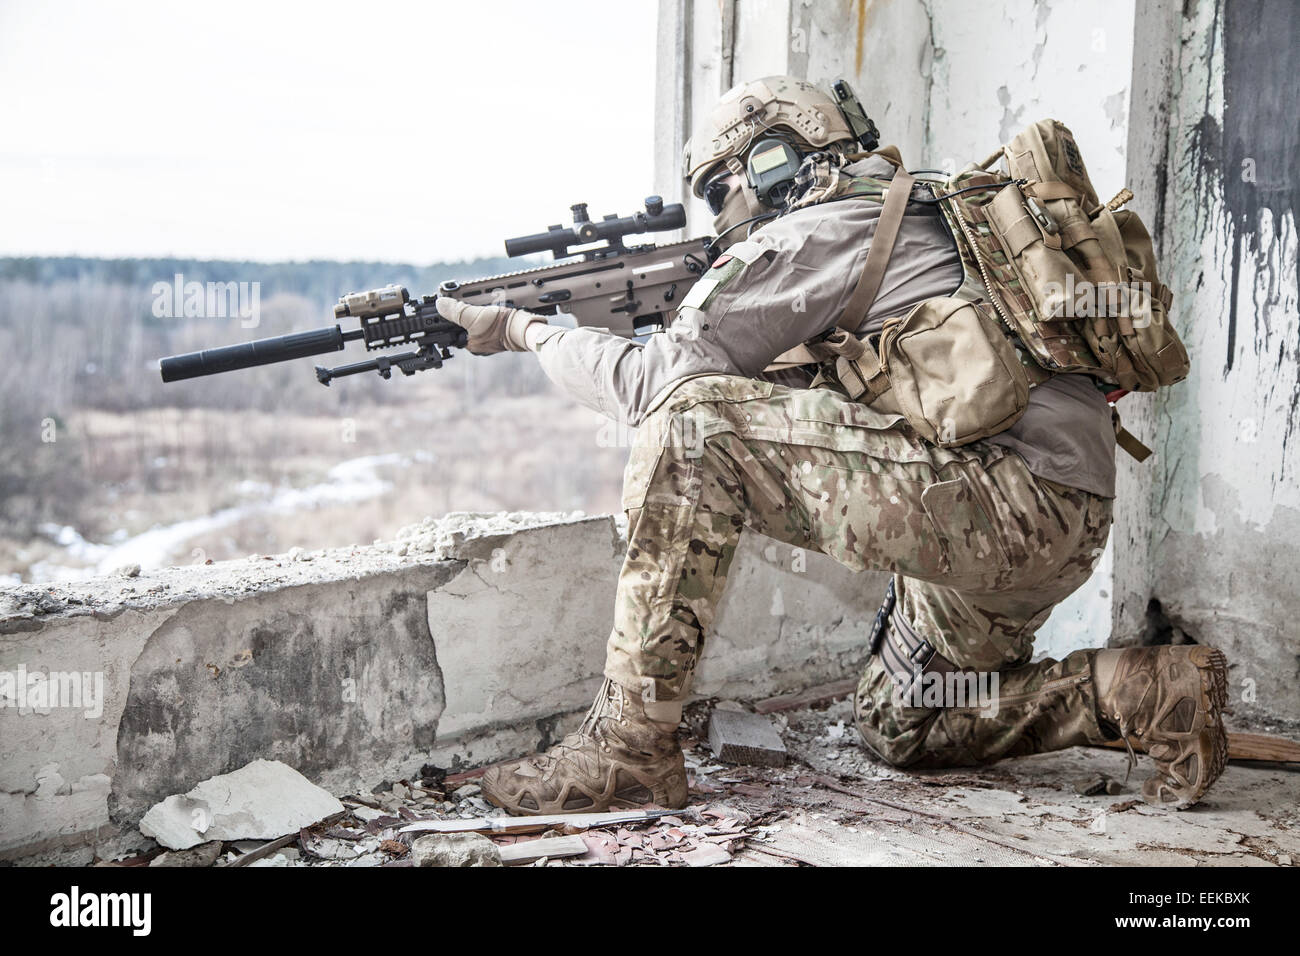 United States Army ranger Stock Photo